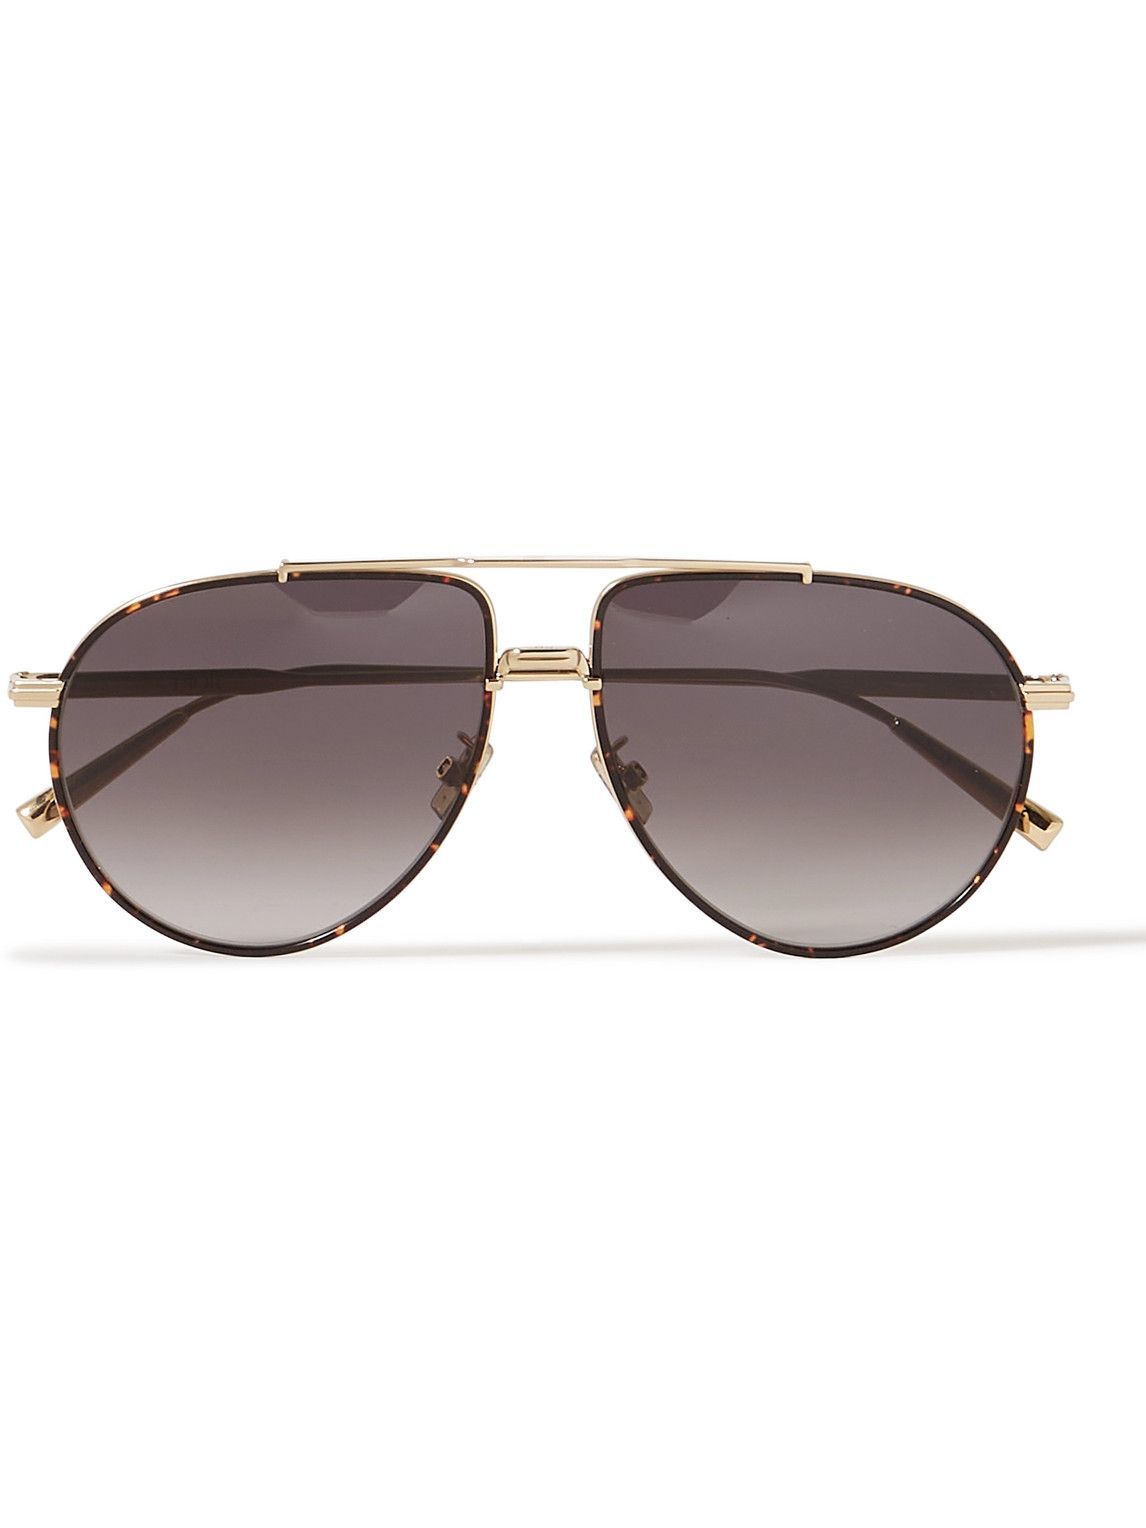 Dior Eyewear Diorblacksuit Au Aviator Style Tortoiseshell Acetate And Gold Tone Sunglasses